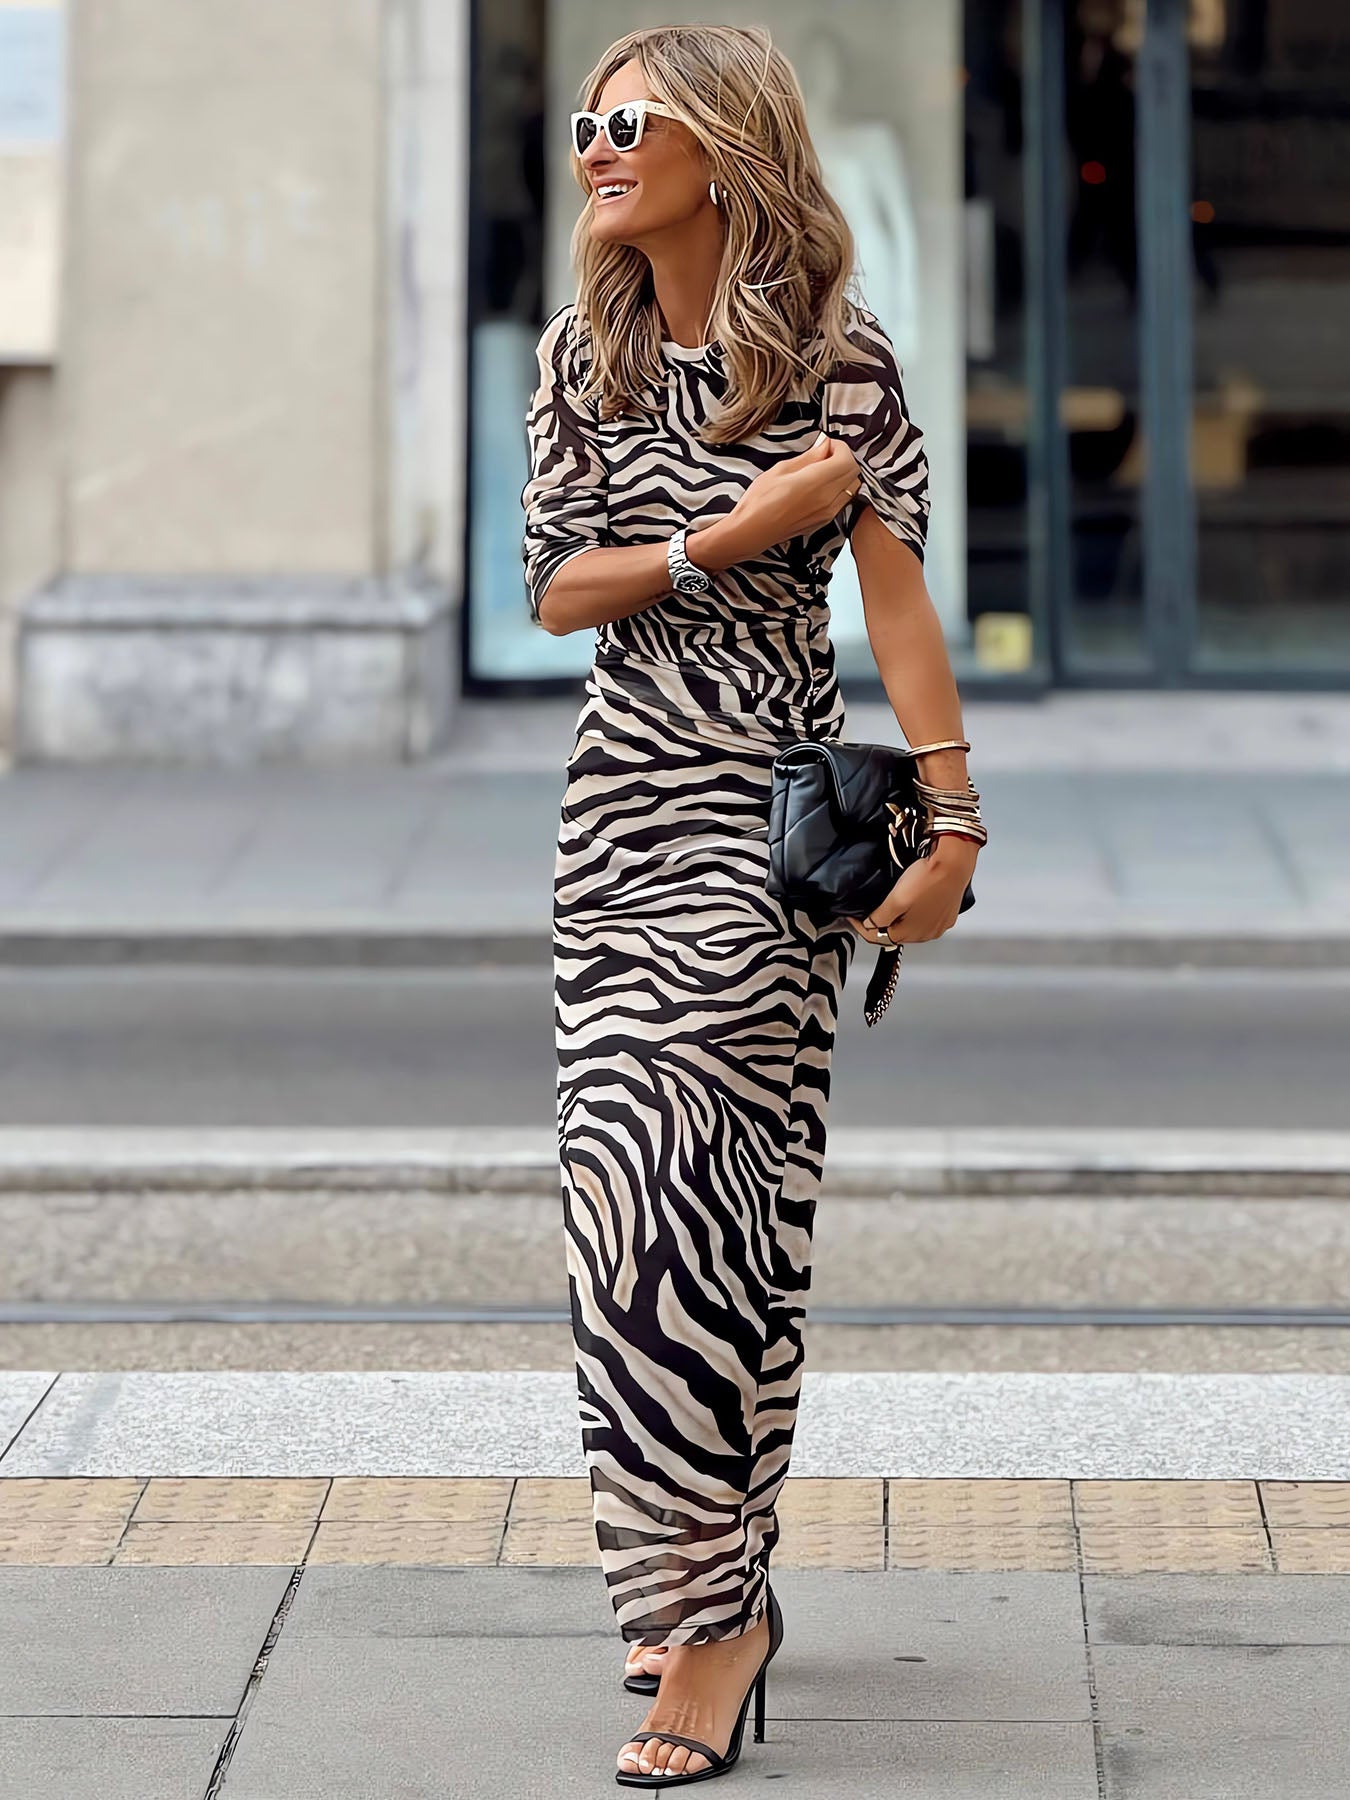 Vorioal Zebra Pattern Dress